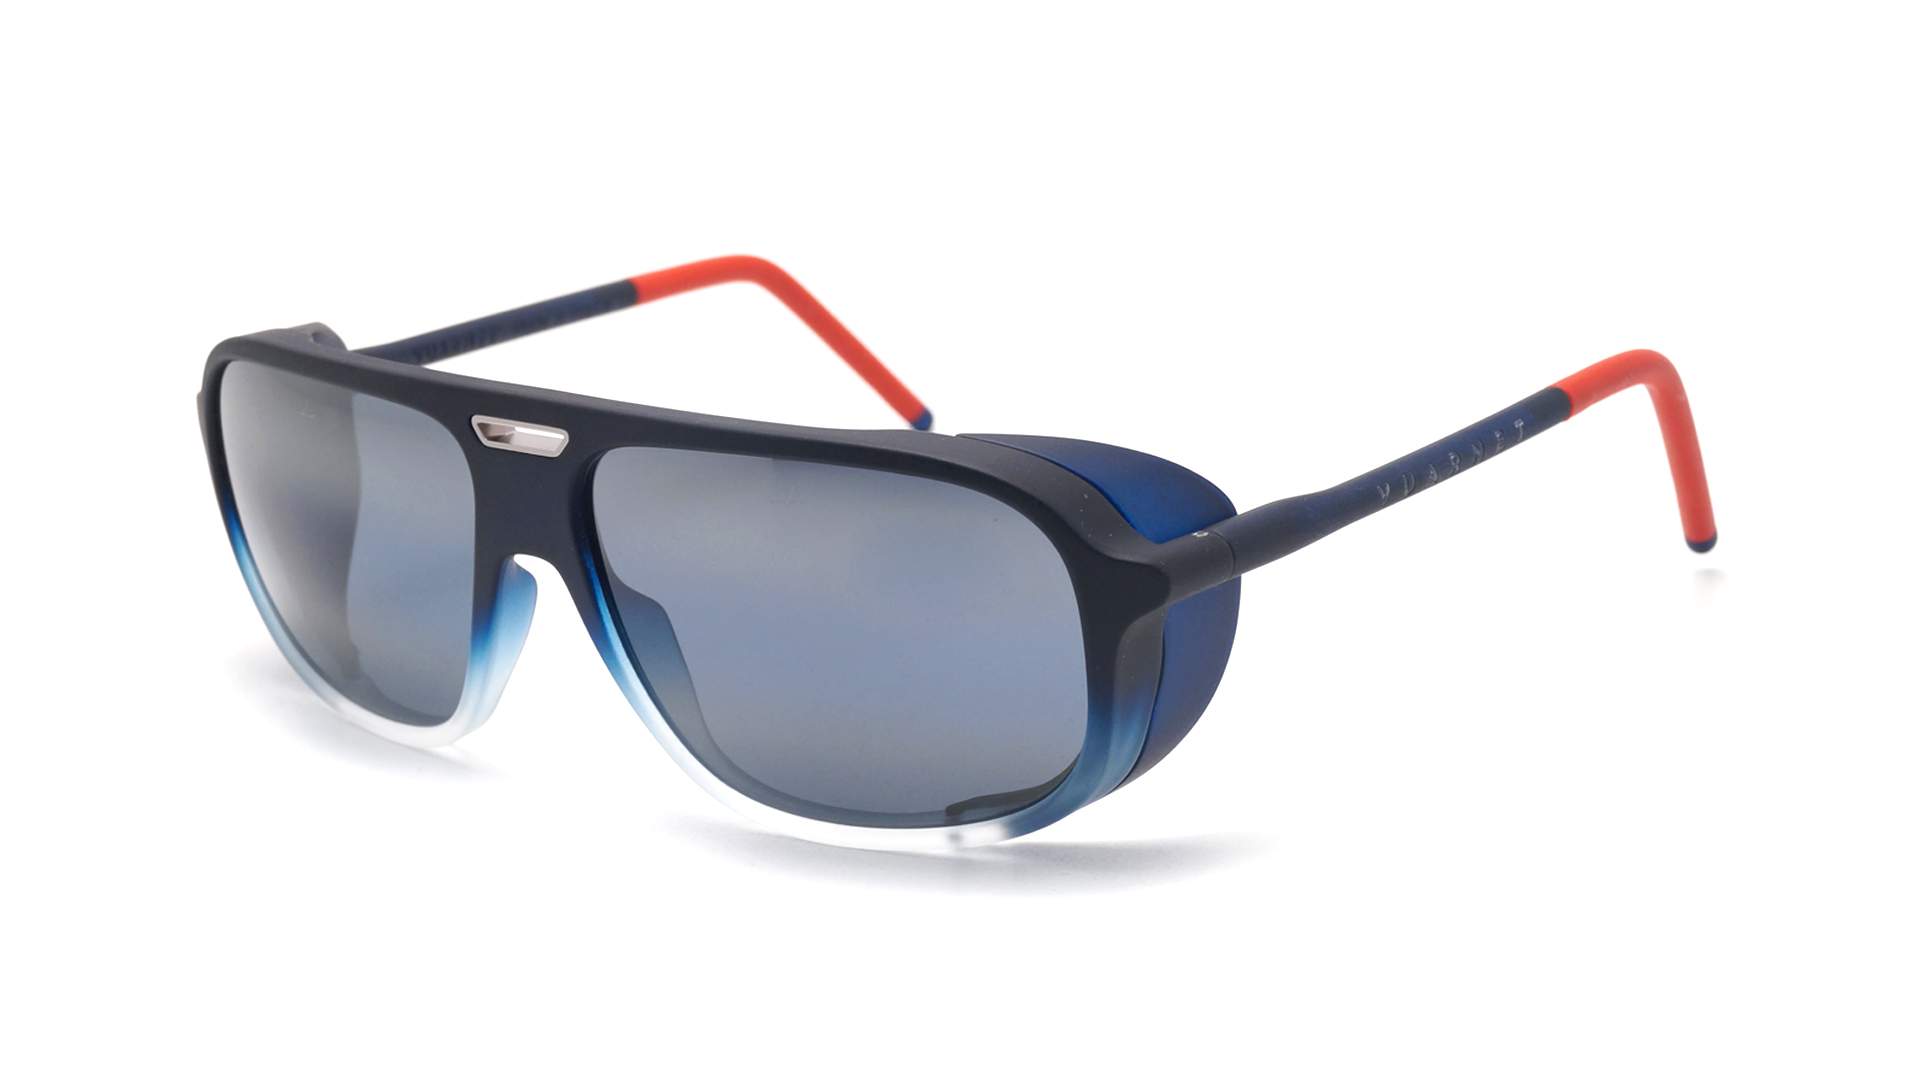 Sunglasses Vuarnet Ice VL1811 0005 60-15 Multicolor in stock | Price ...